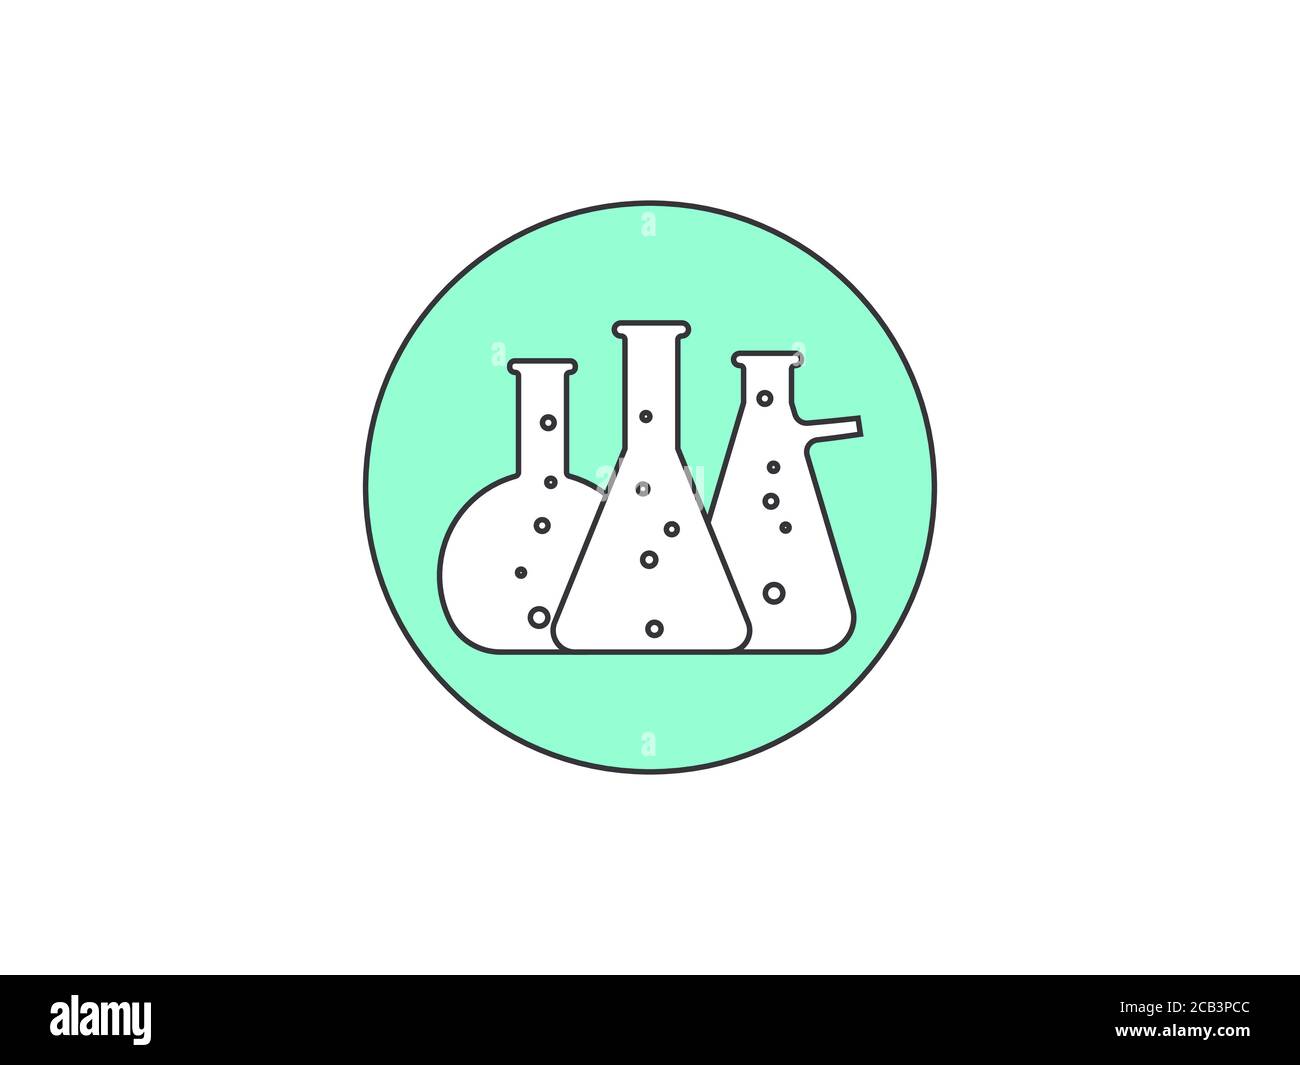 Biologie, Experiment, Flask Icon. Vektorgrafik, flache Ausführung. Stock Vektor